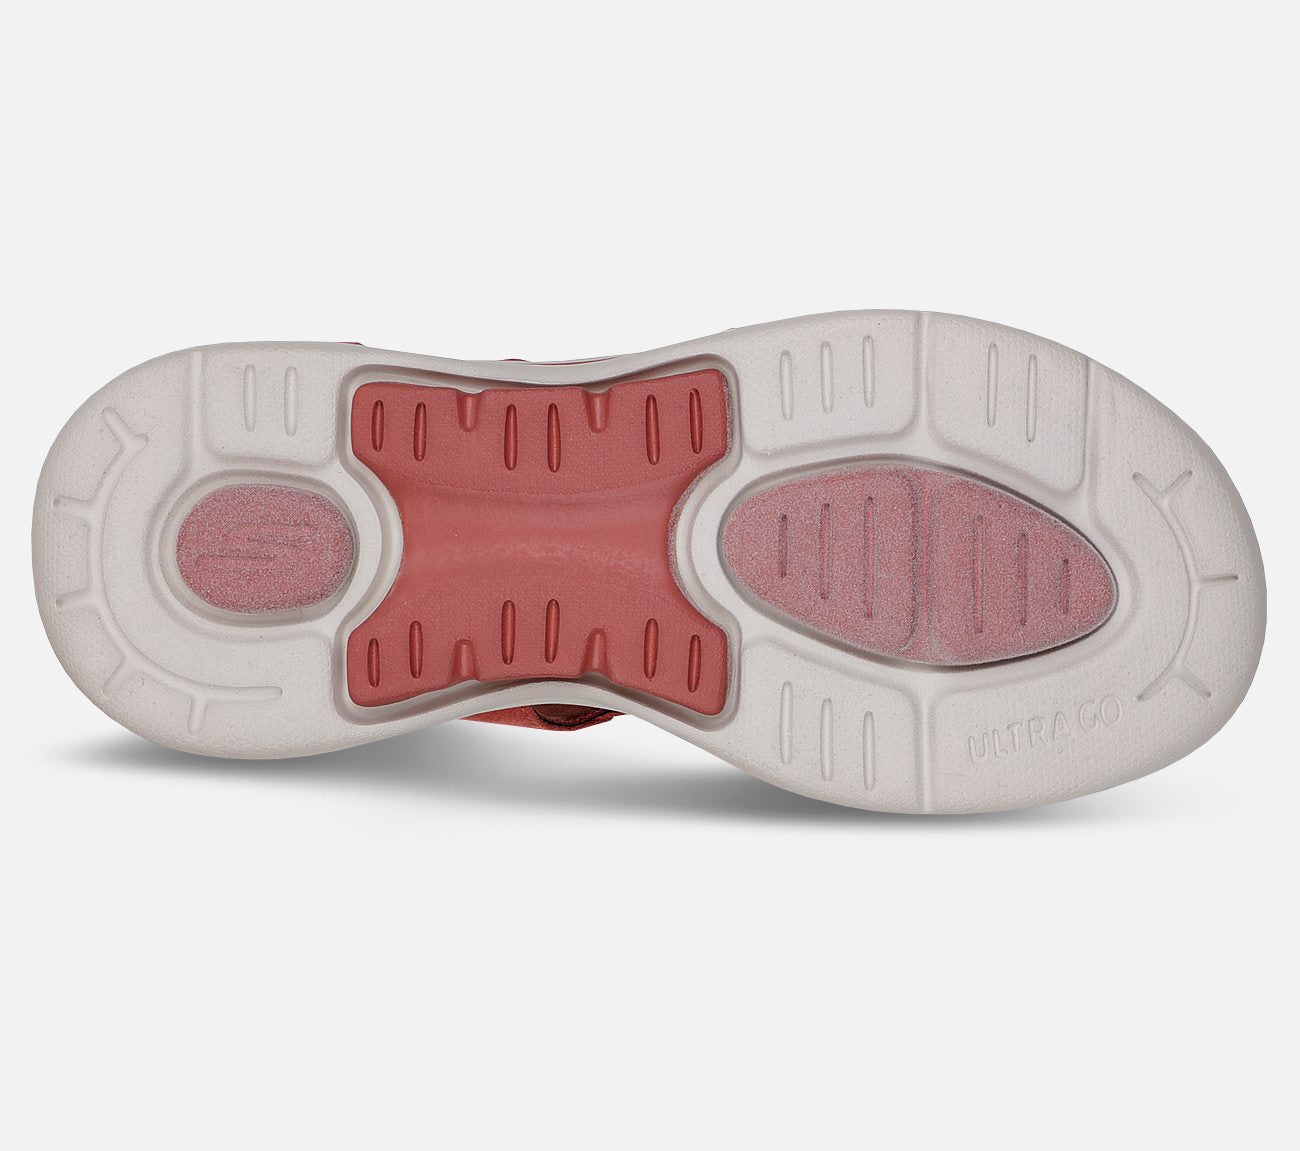 GO WALK Arch Fit - Treasured Sandal Sandal Skechers